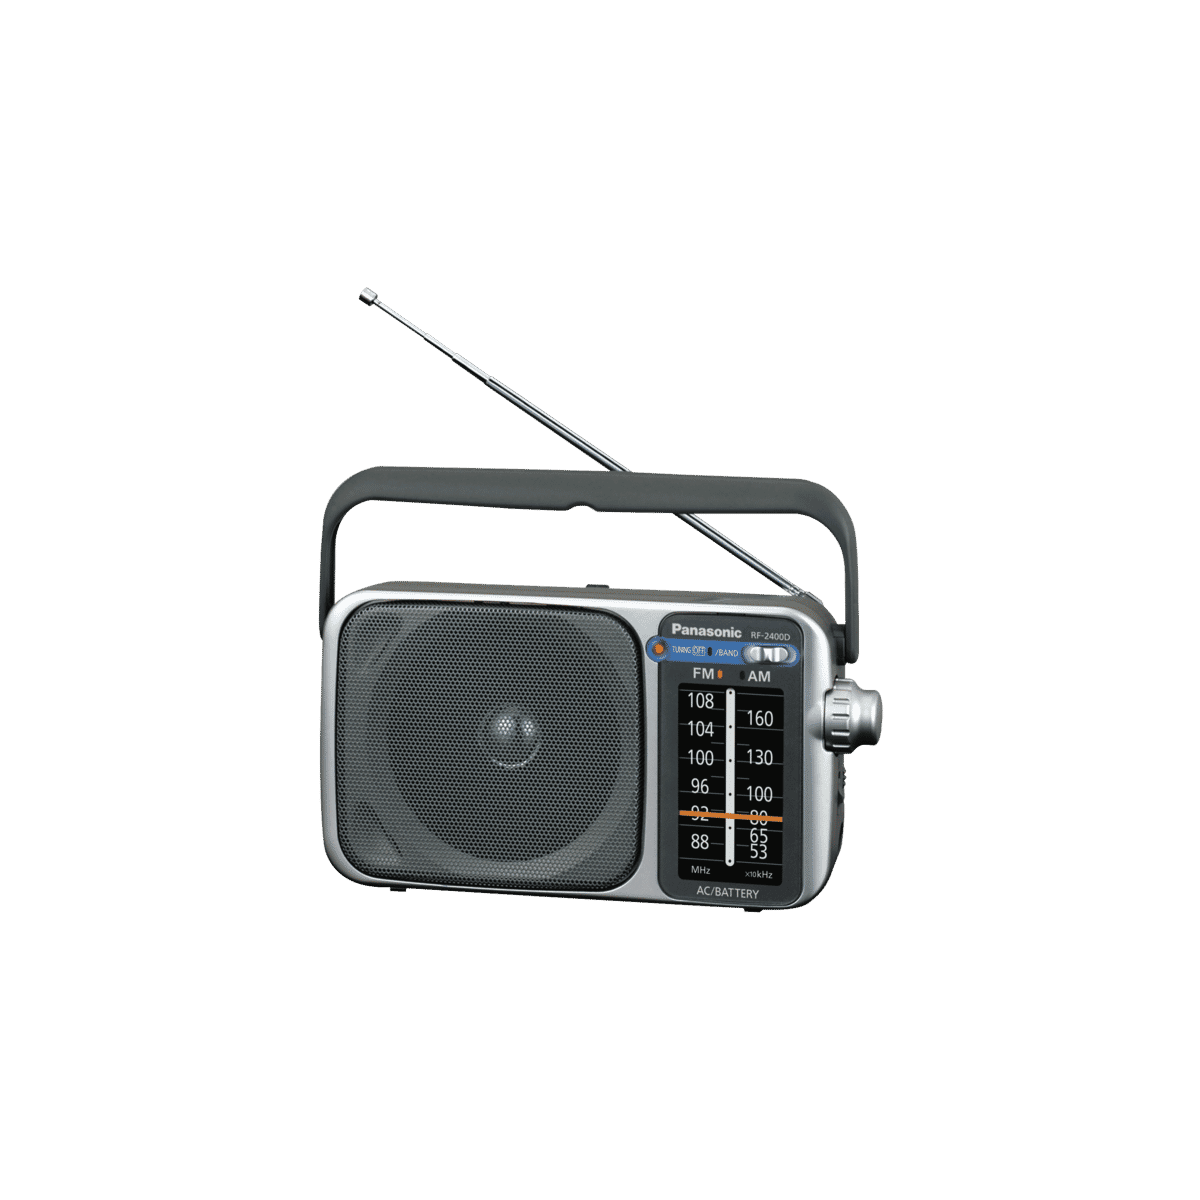 Panasonic RF-2400DGN-S Portable Radio AM/FM at The Good Guys